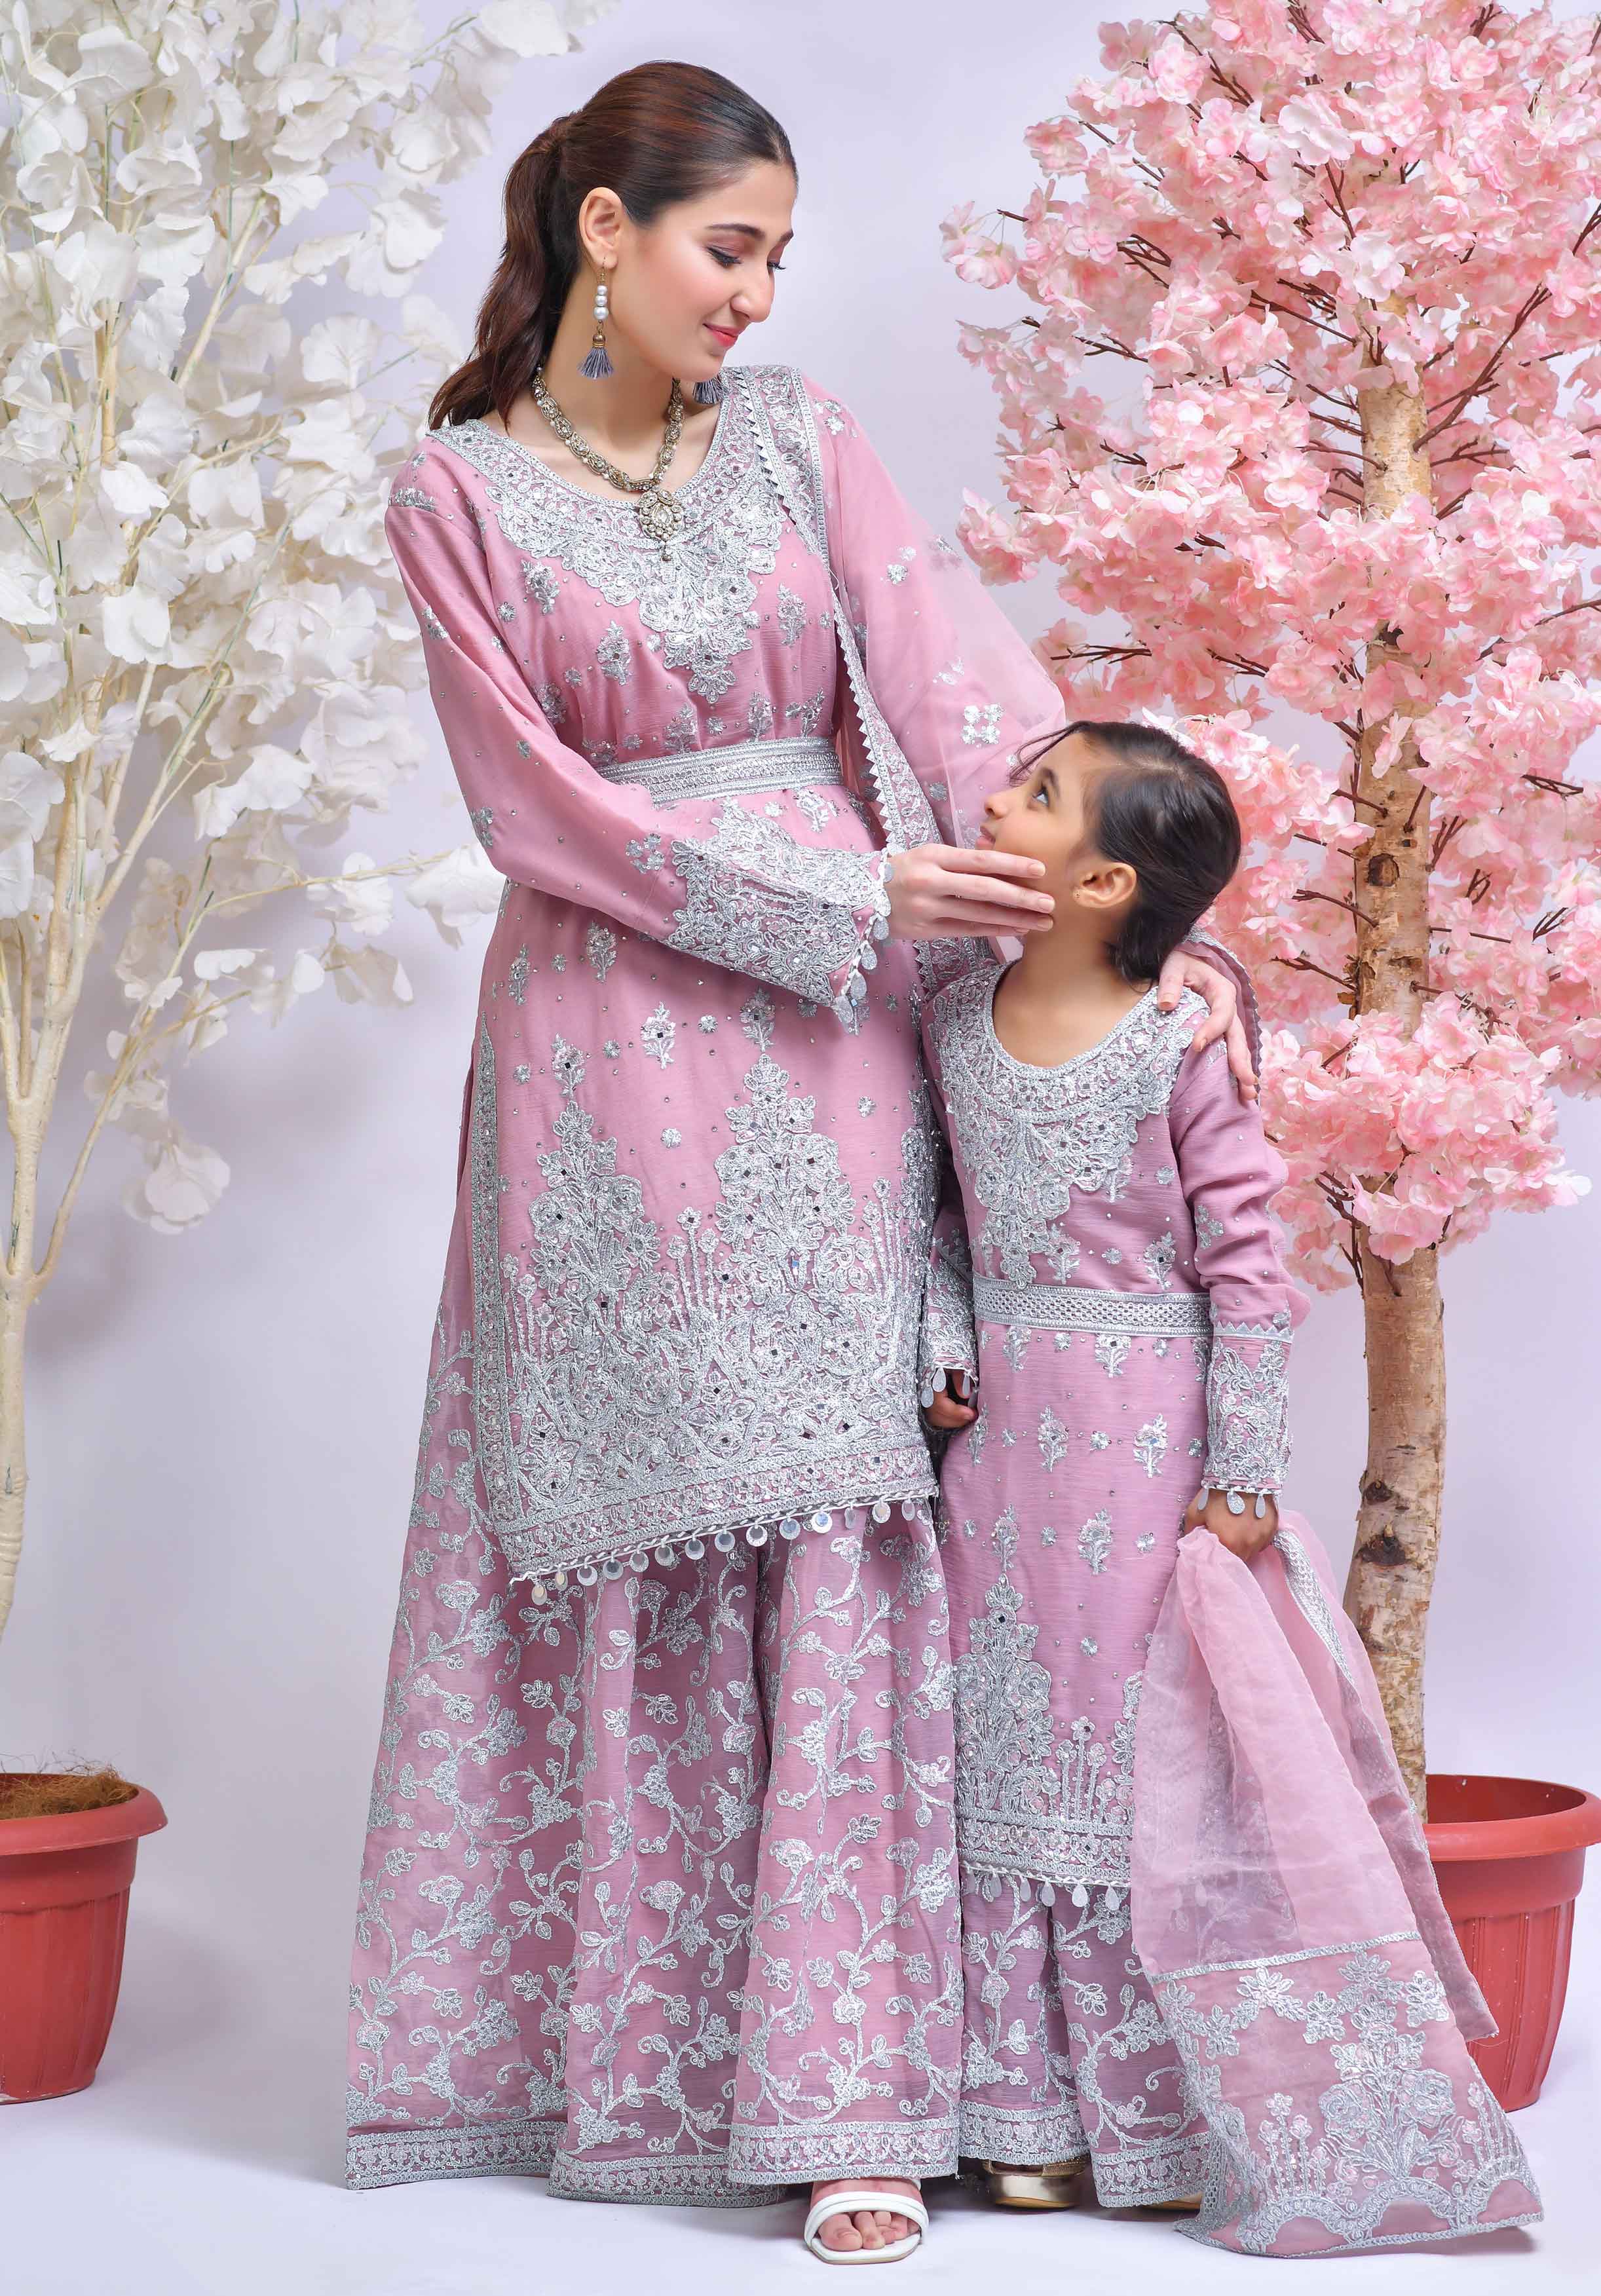 Simrans Mother & Daughter Dusty Pink Kids Sharara Oufit salwar kameez DesiP 